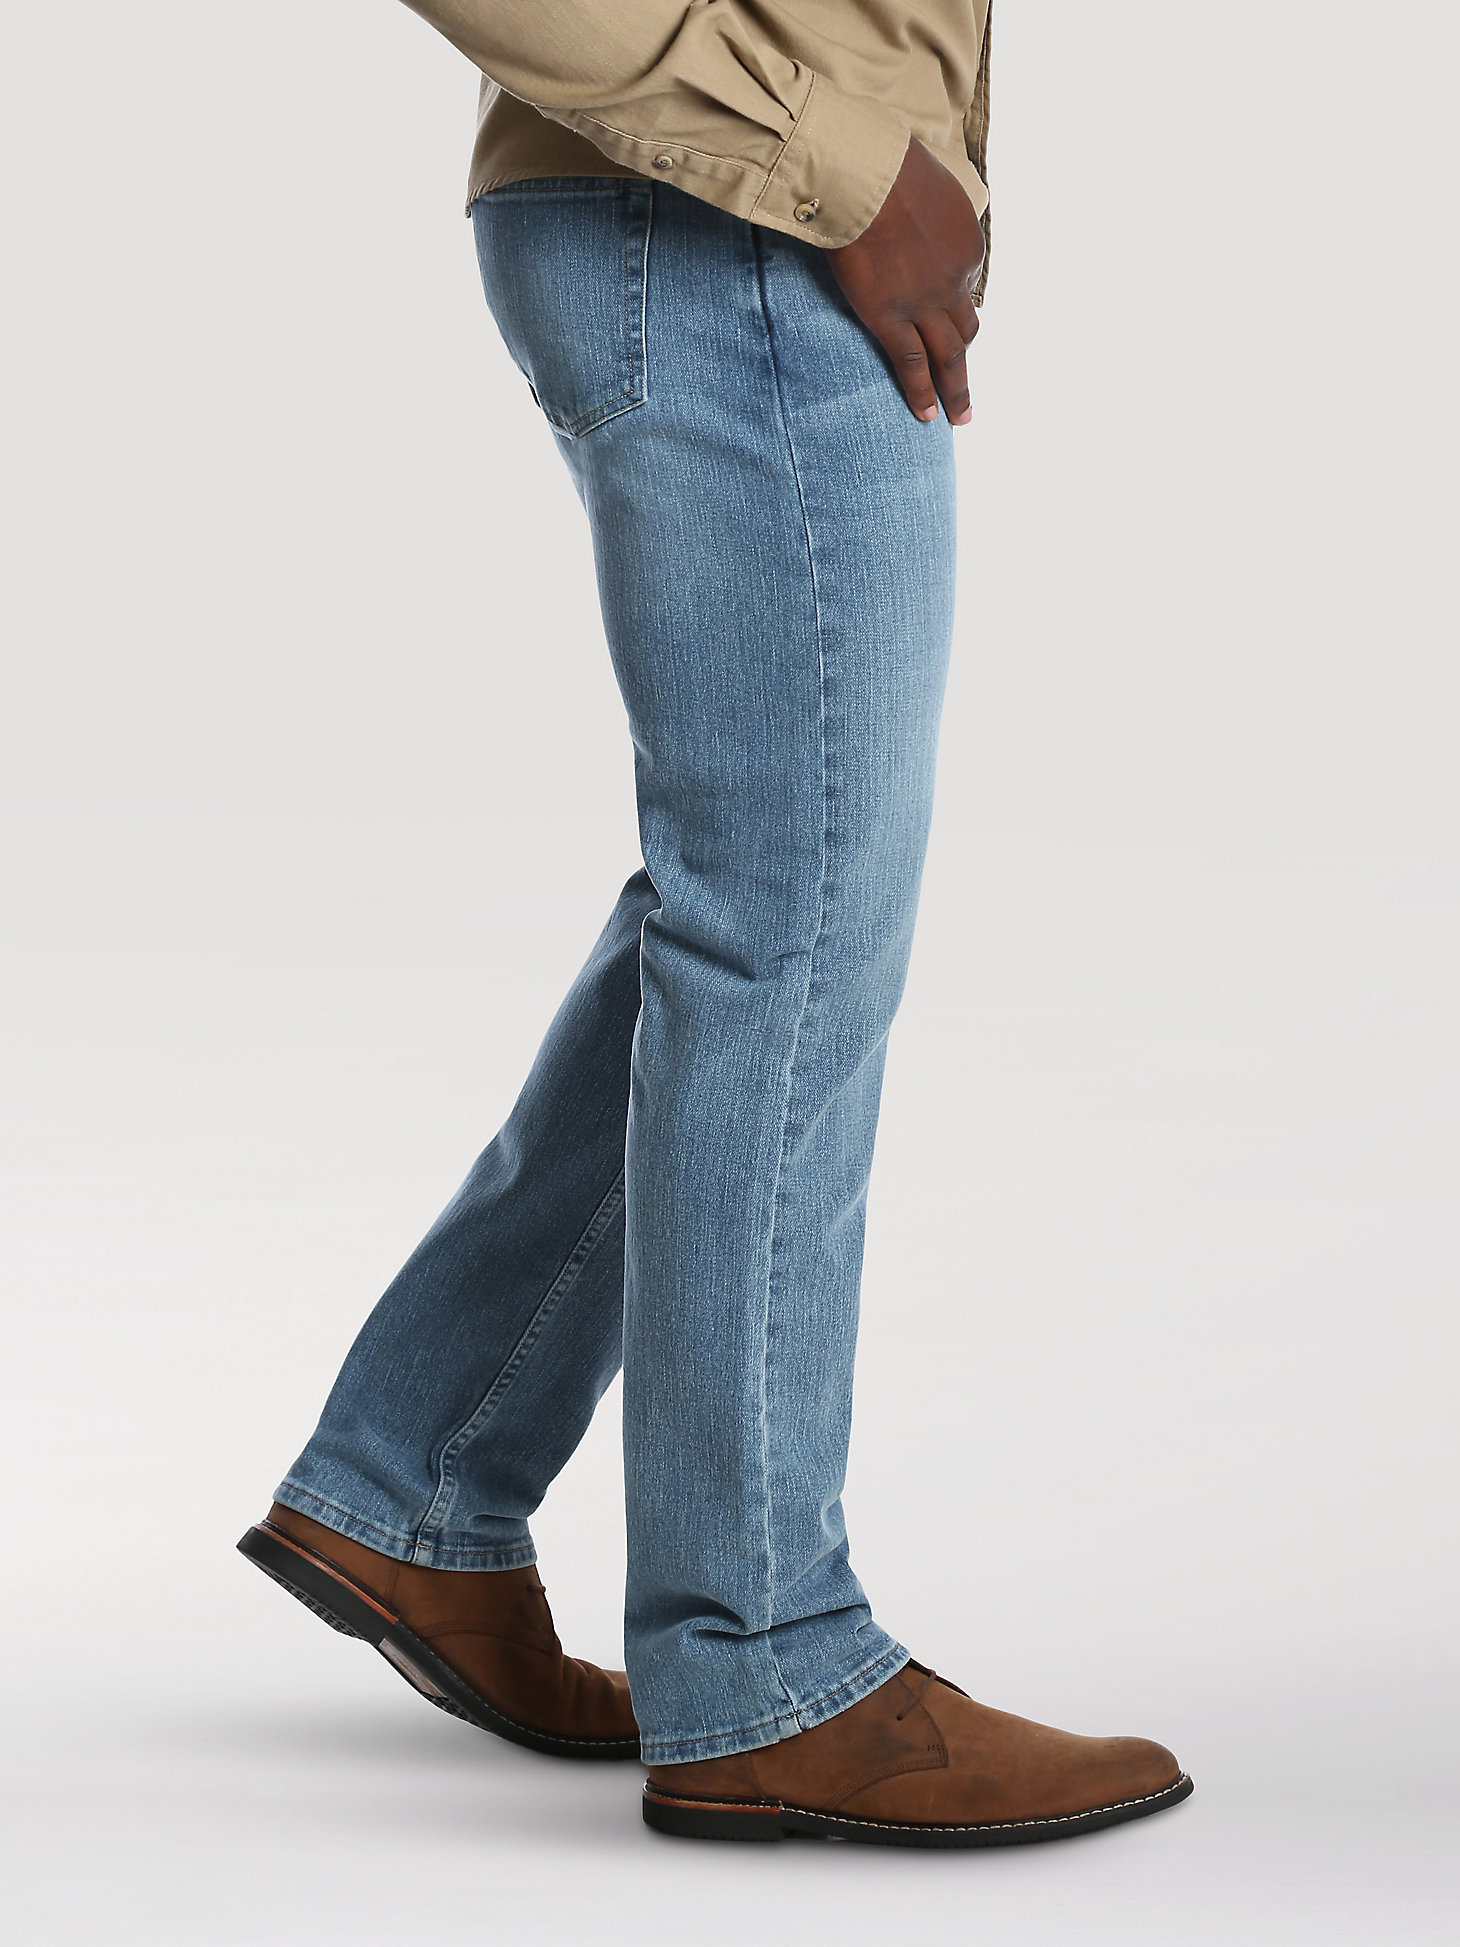 Wrangler® Five Star Premium Denim Flex For Comfort Regular Fit Jean in Stonewash Light alternative view 2